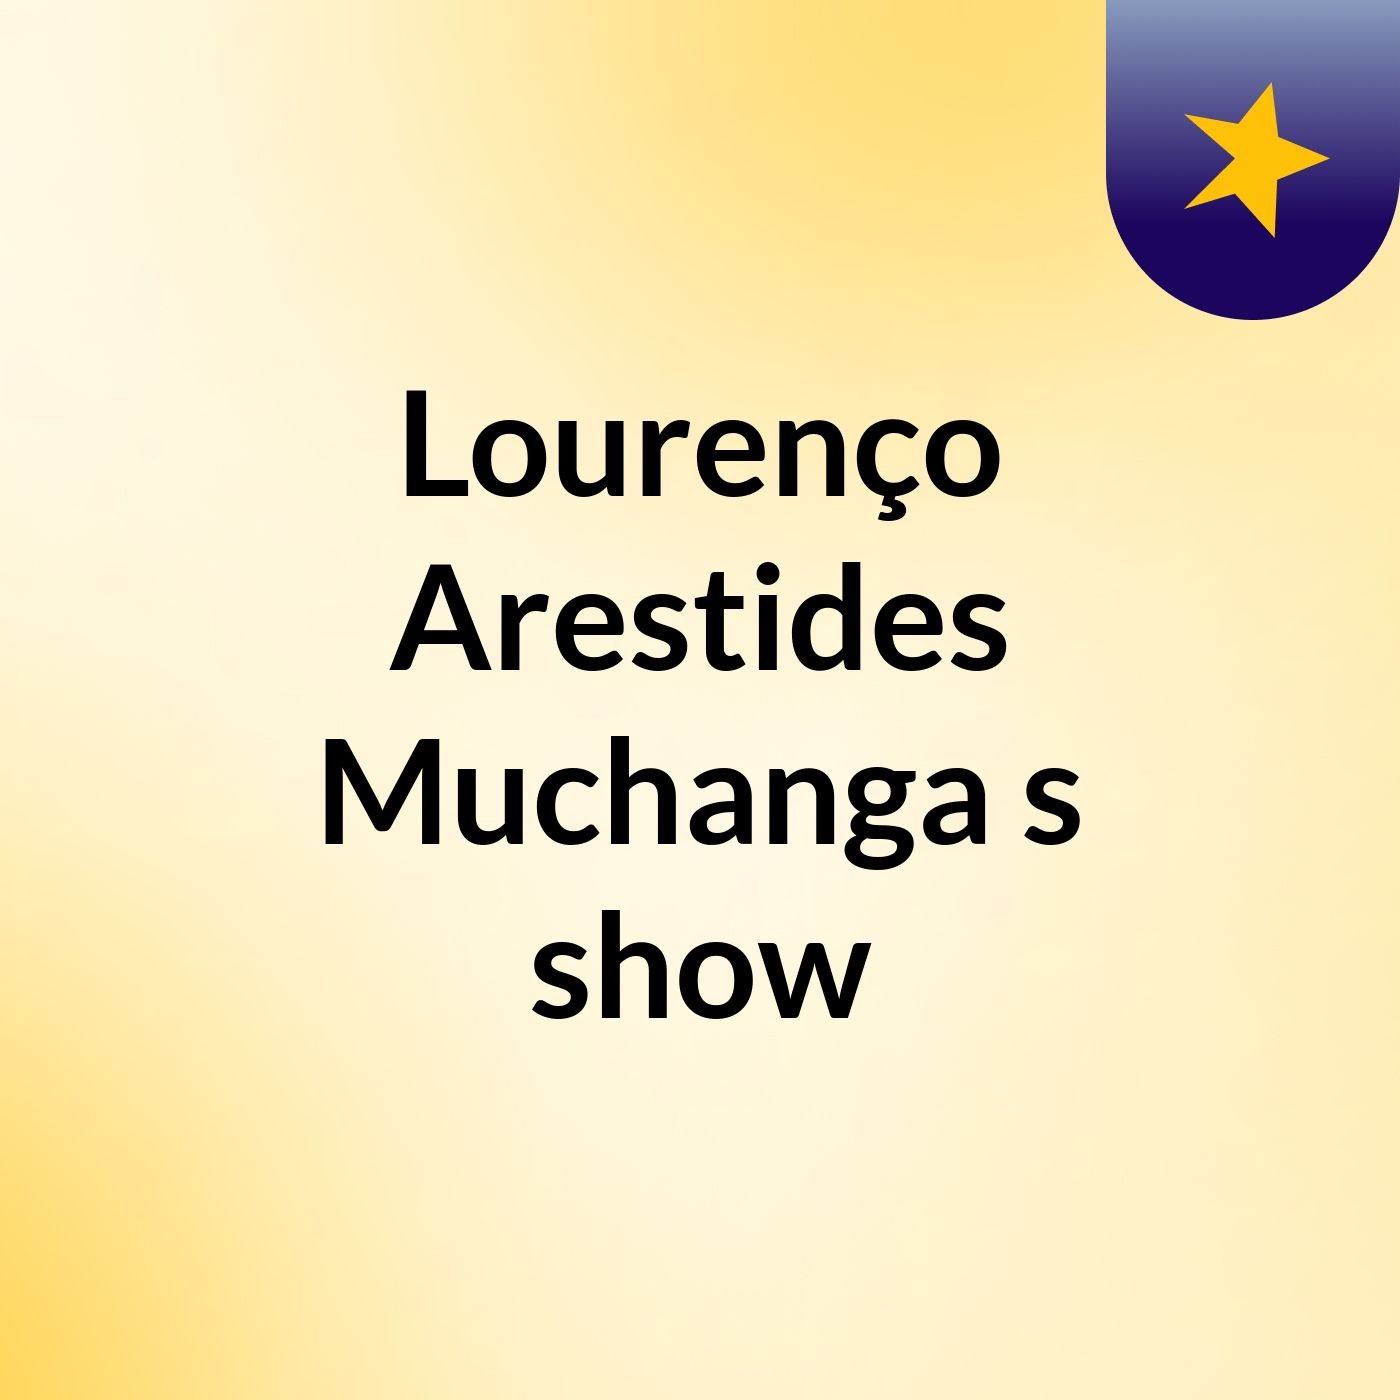 Lourenço Arestides Muchanga's show